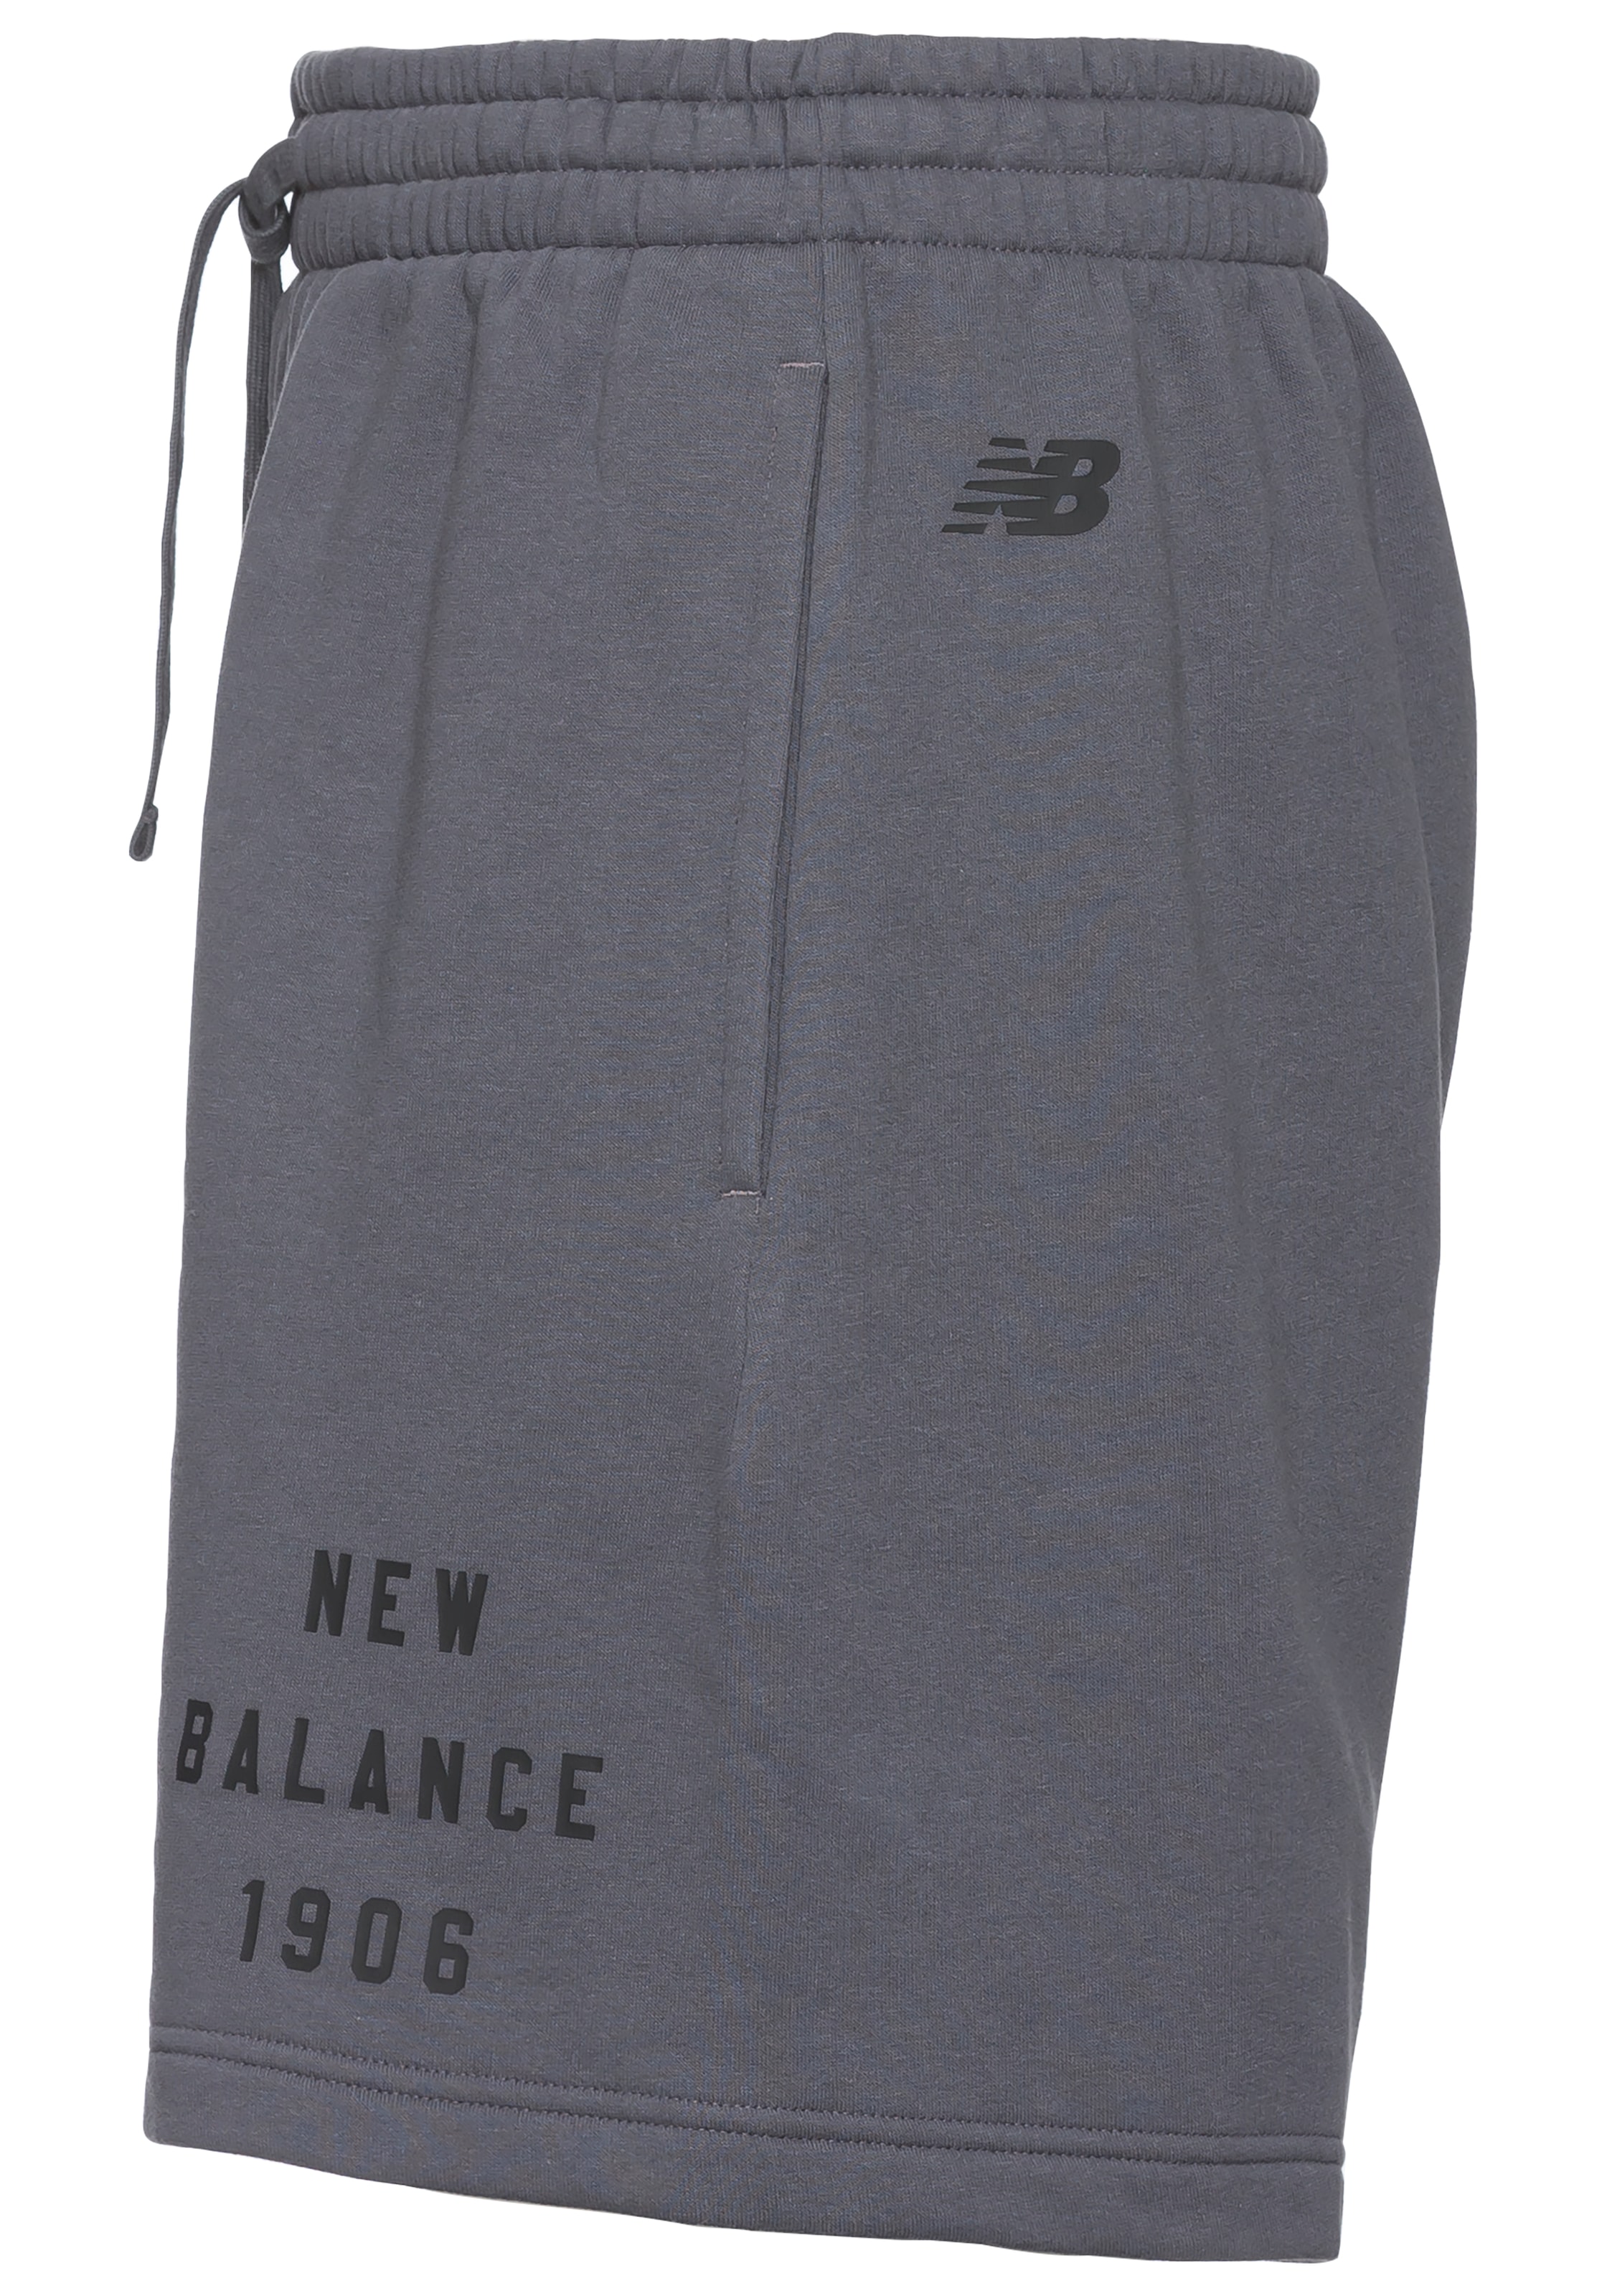 New Balance Shorts